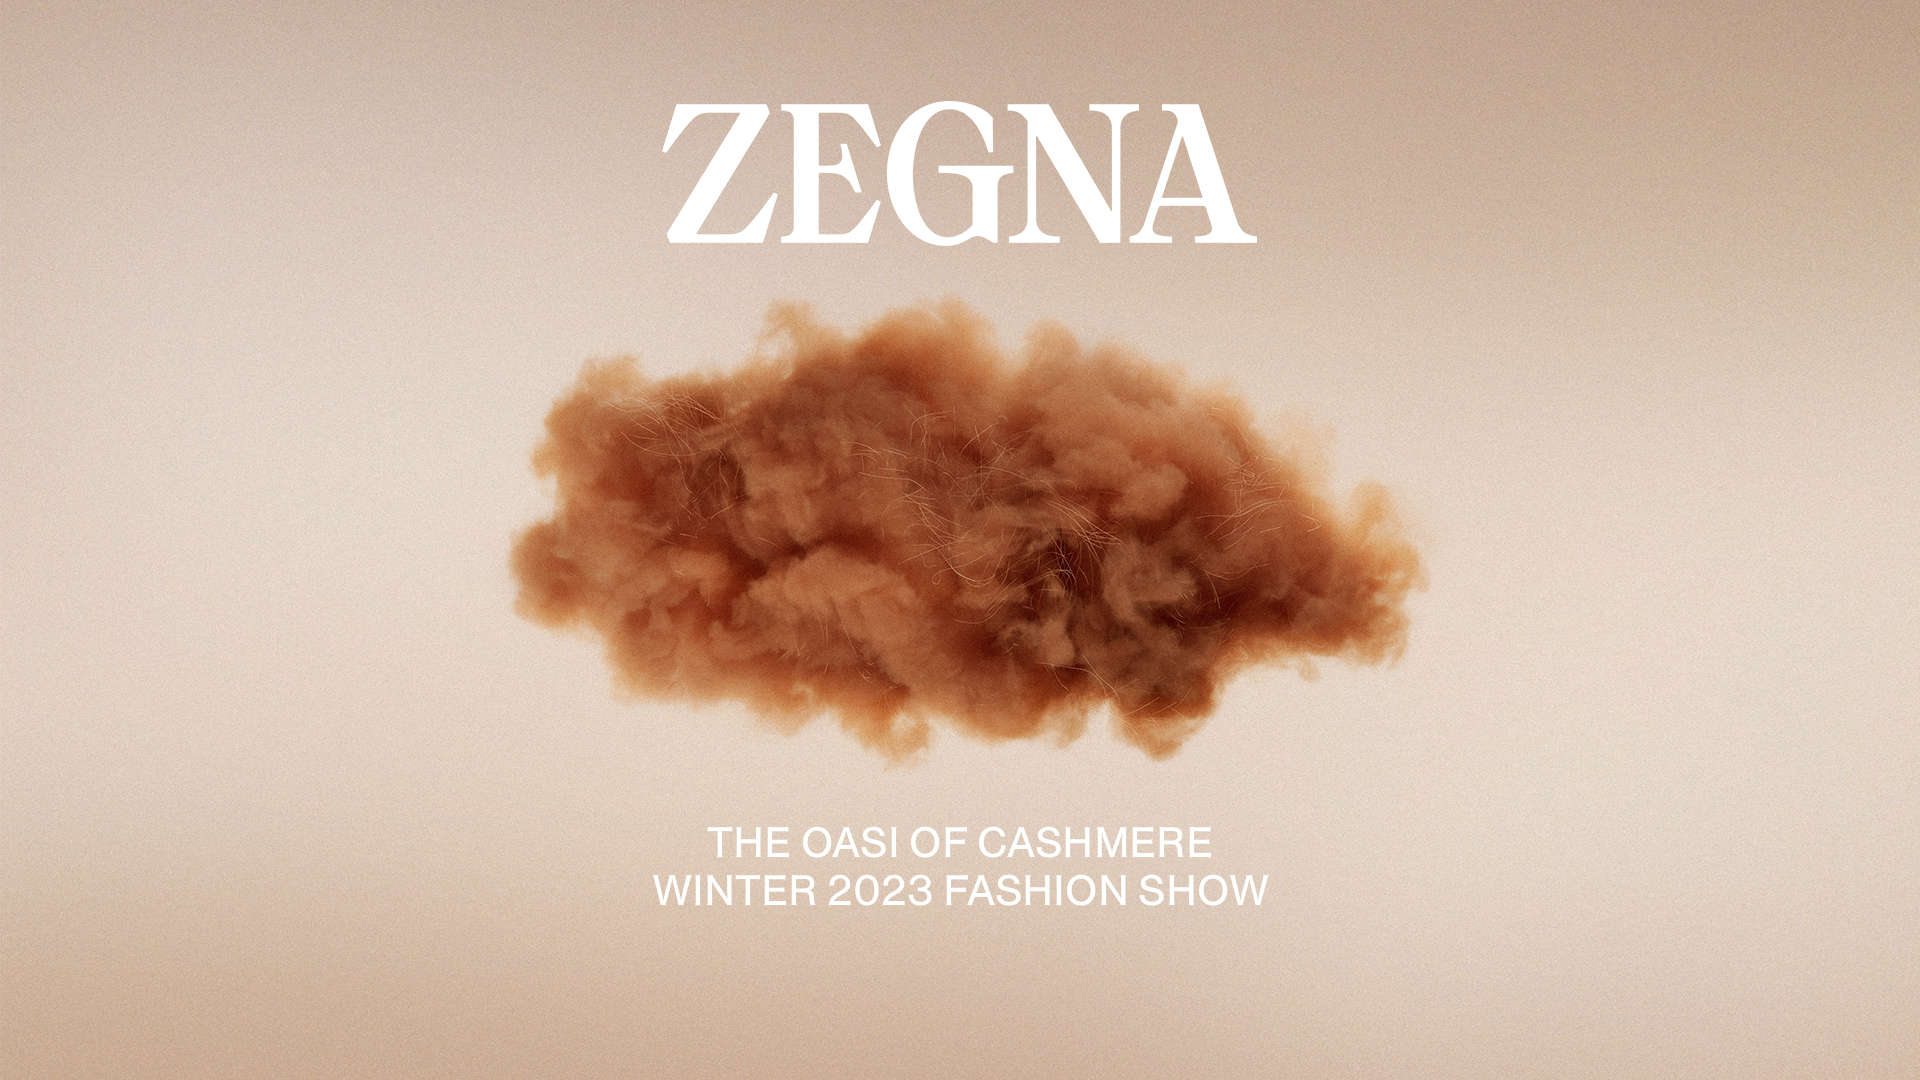 Zegna Oasi of cashmere